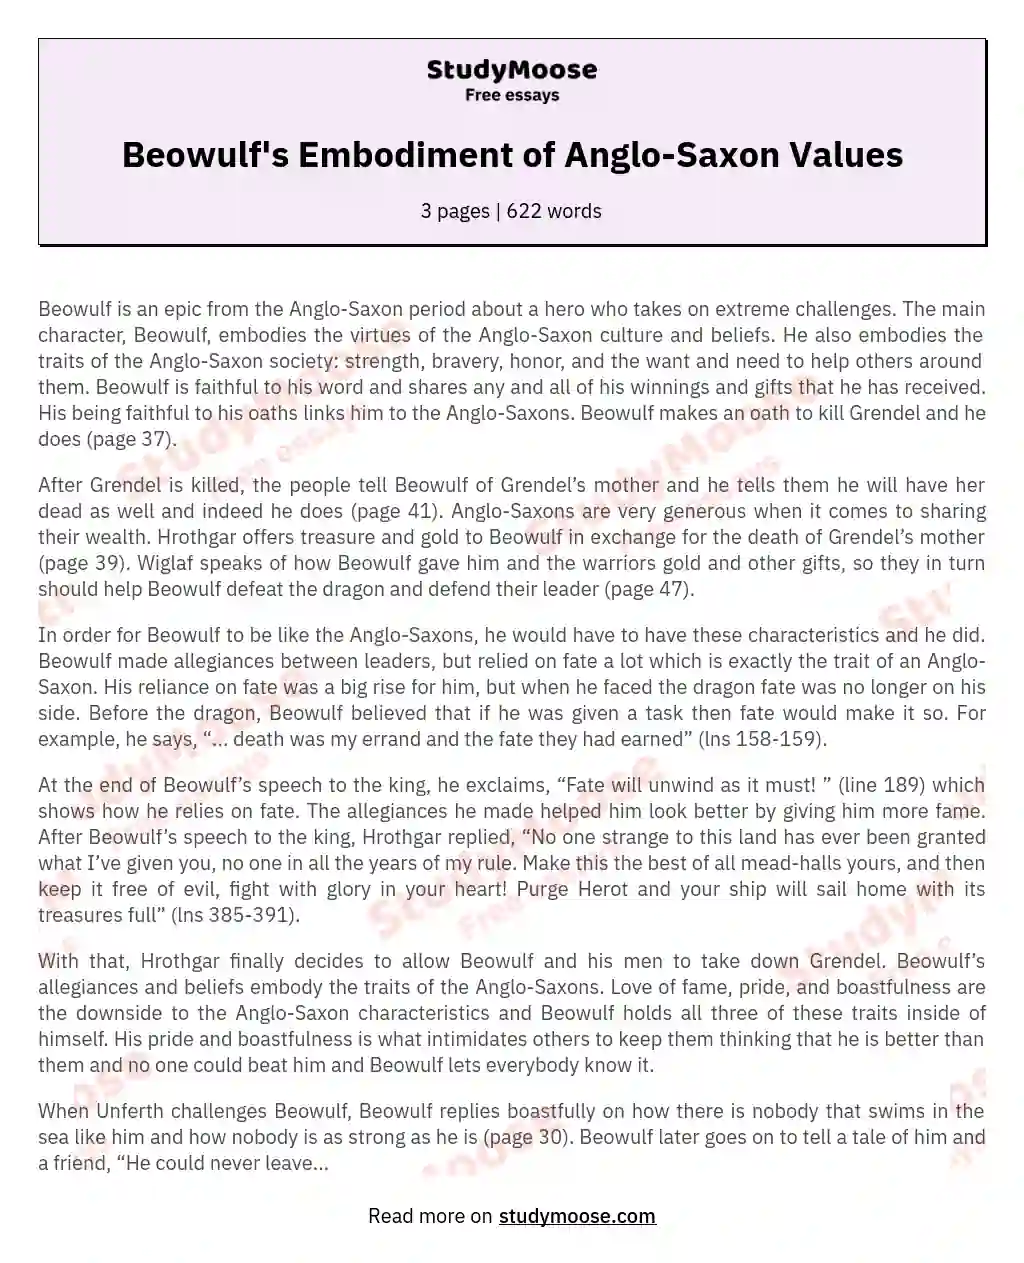 An Epic Hero: Beowulf